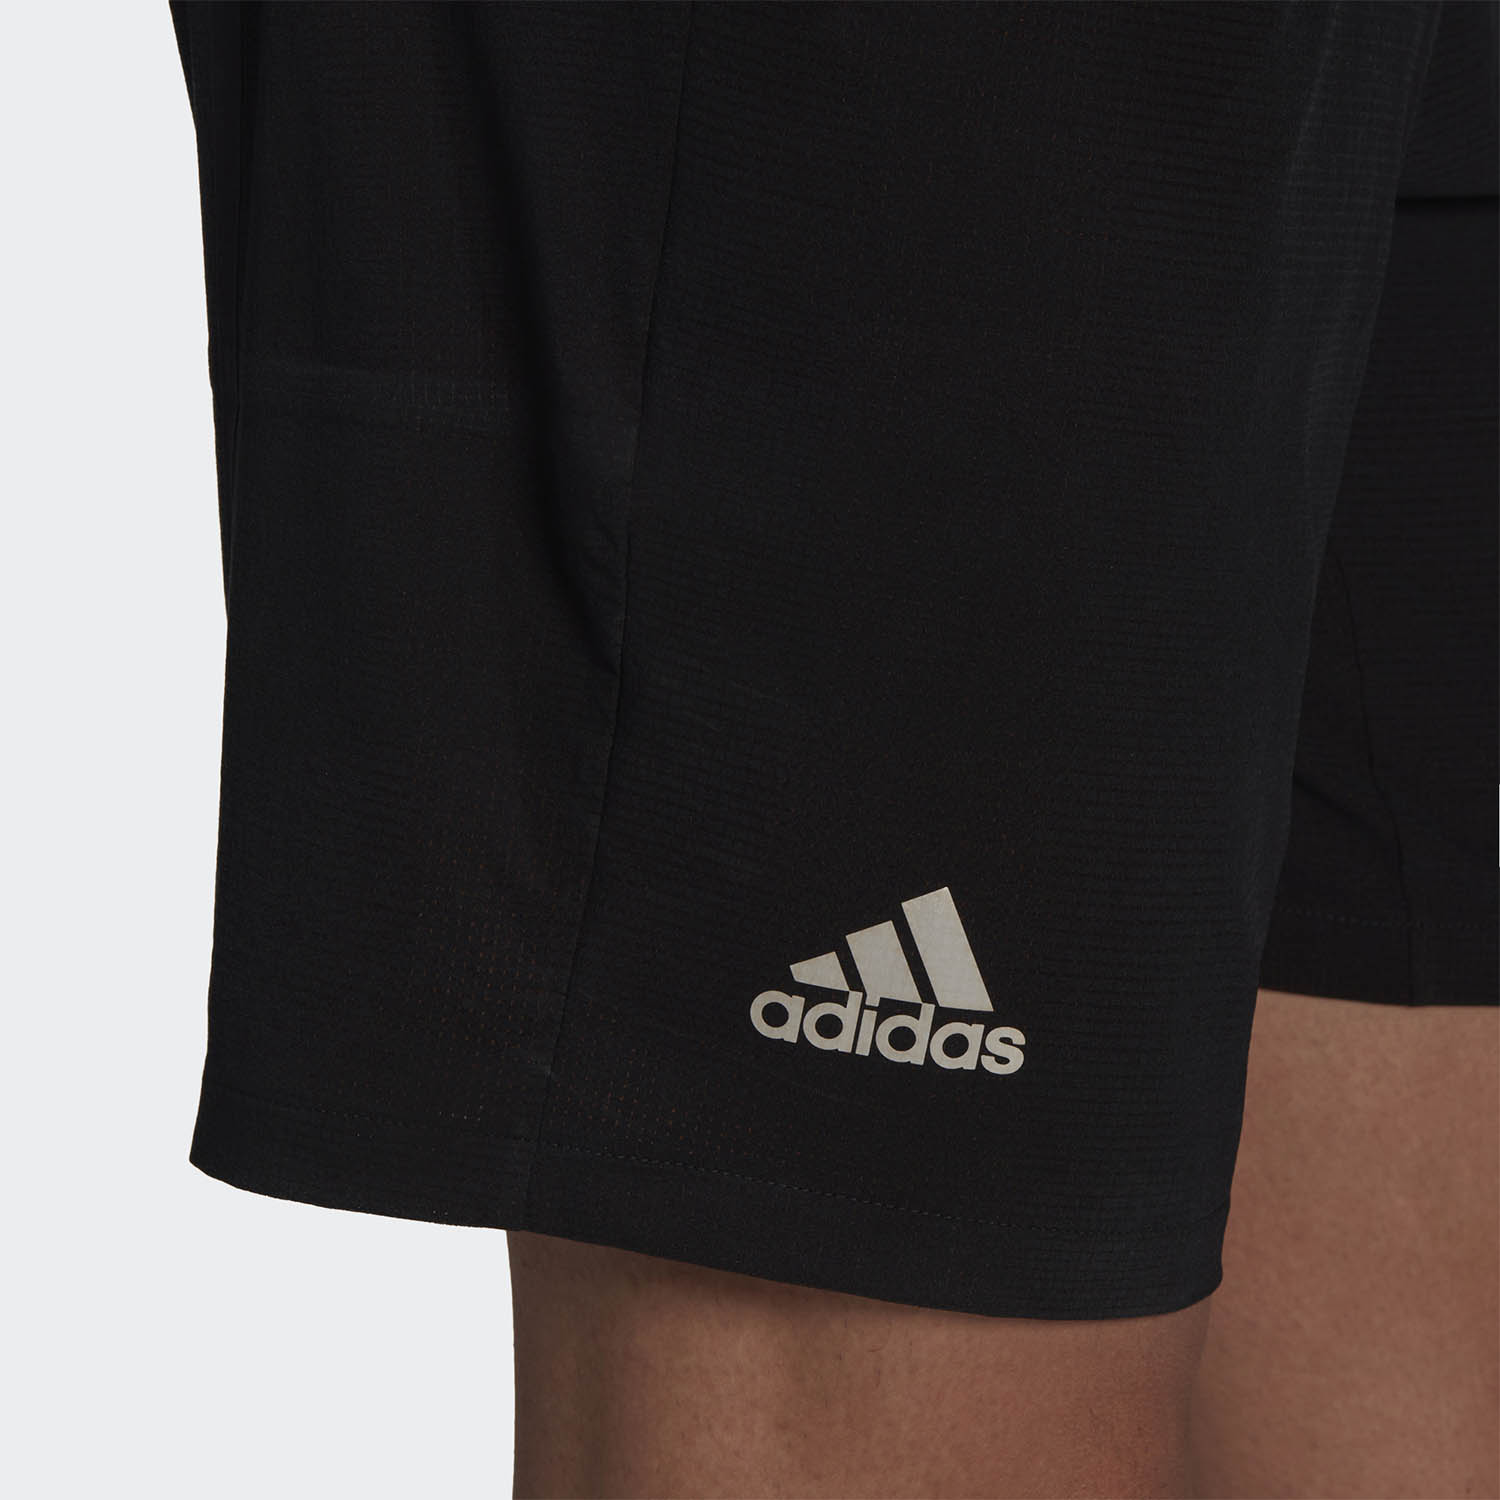 adidas Ergo Primegreen 7in Men's Tennis Shorts - Black/White